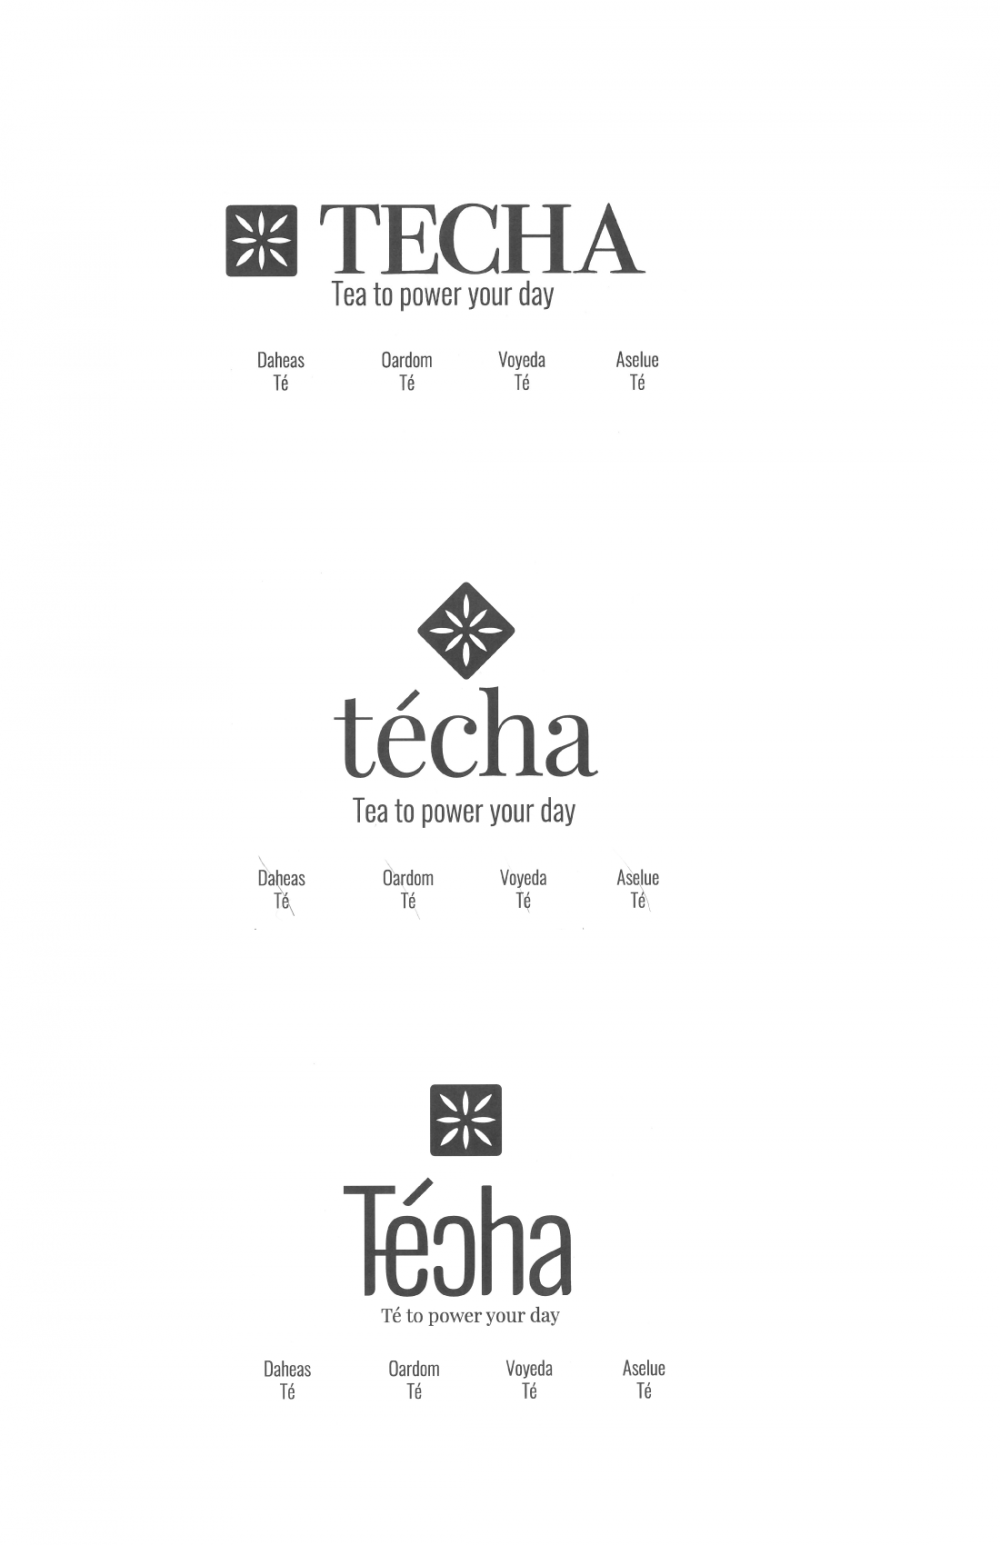 Techa: Iced Tea to power you day 3